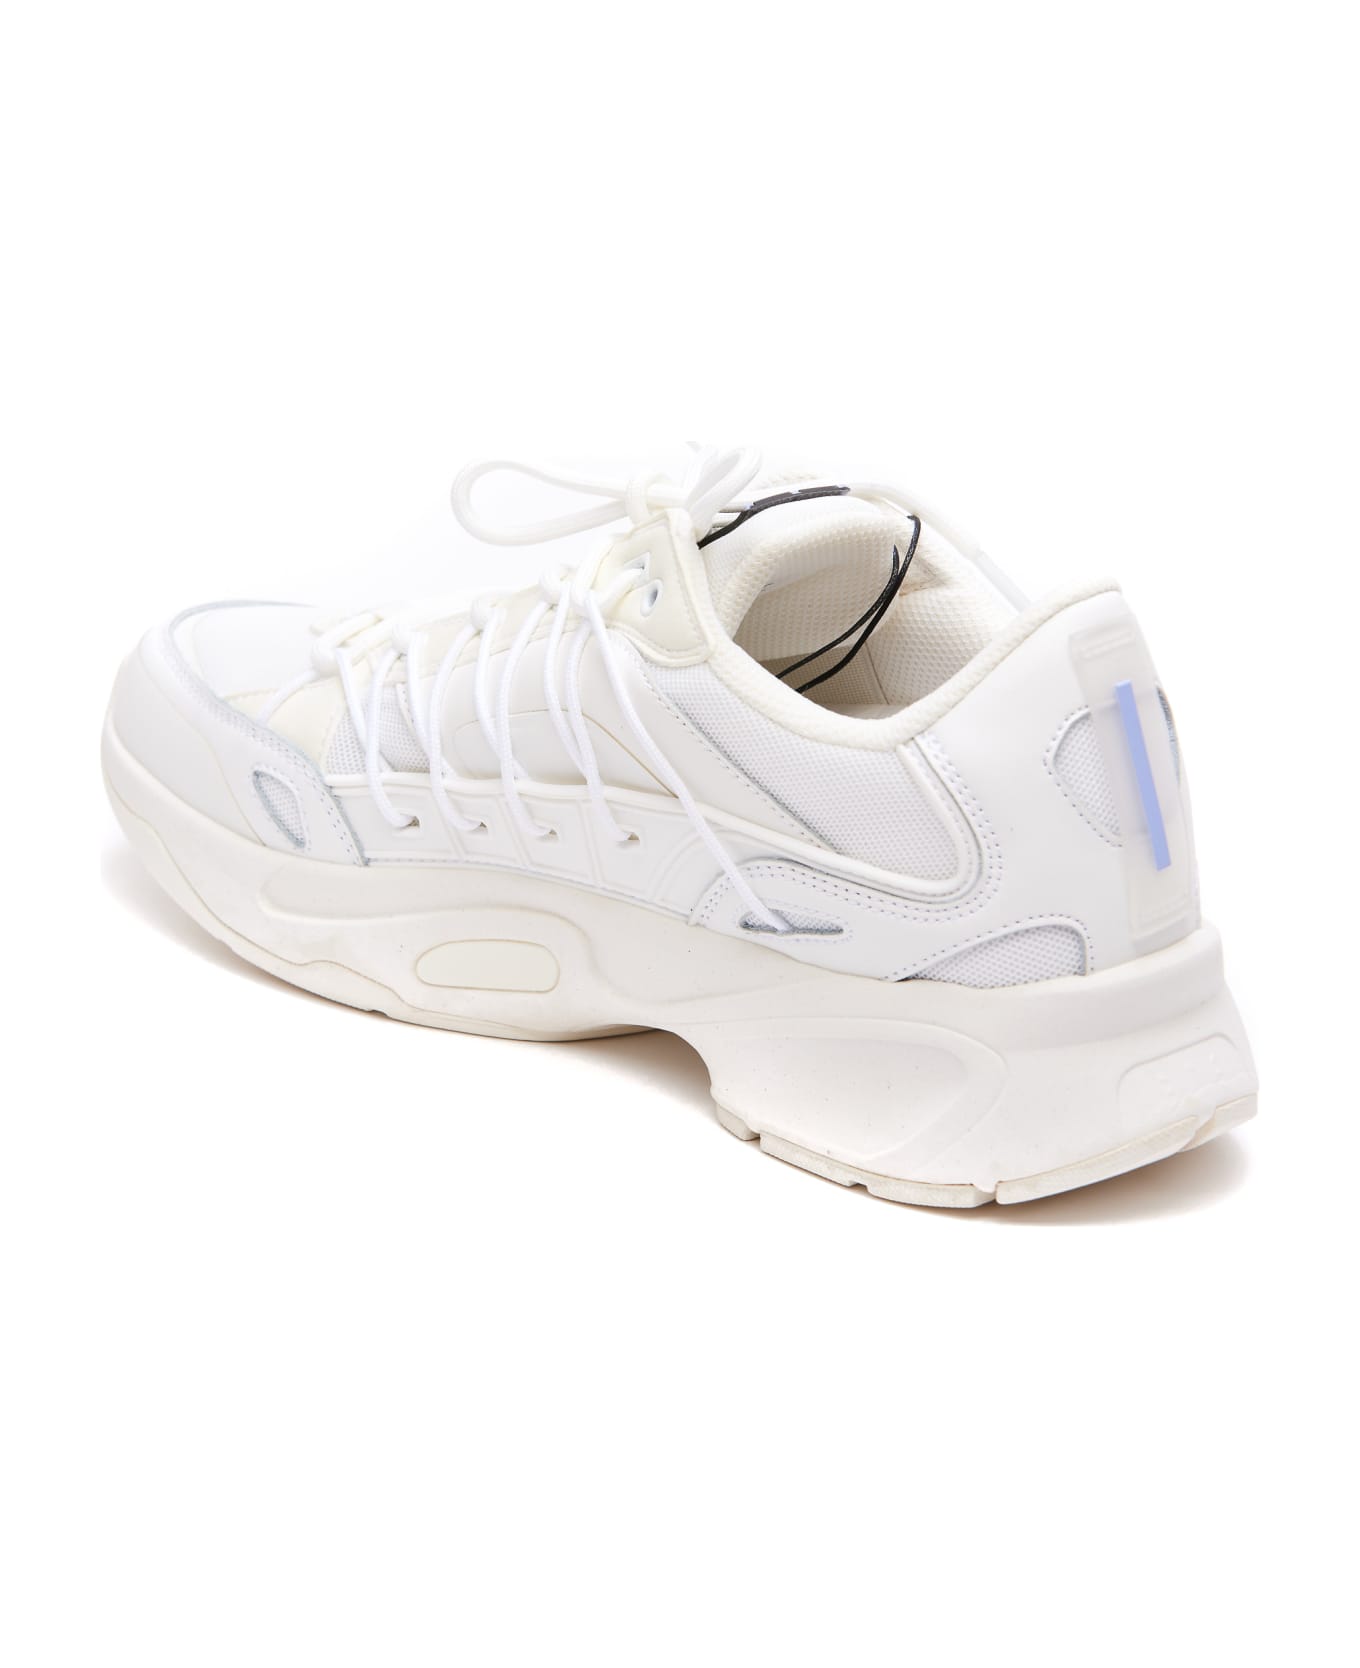 McQ Alexander McQueen Ico Aratana Sneakers - White